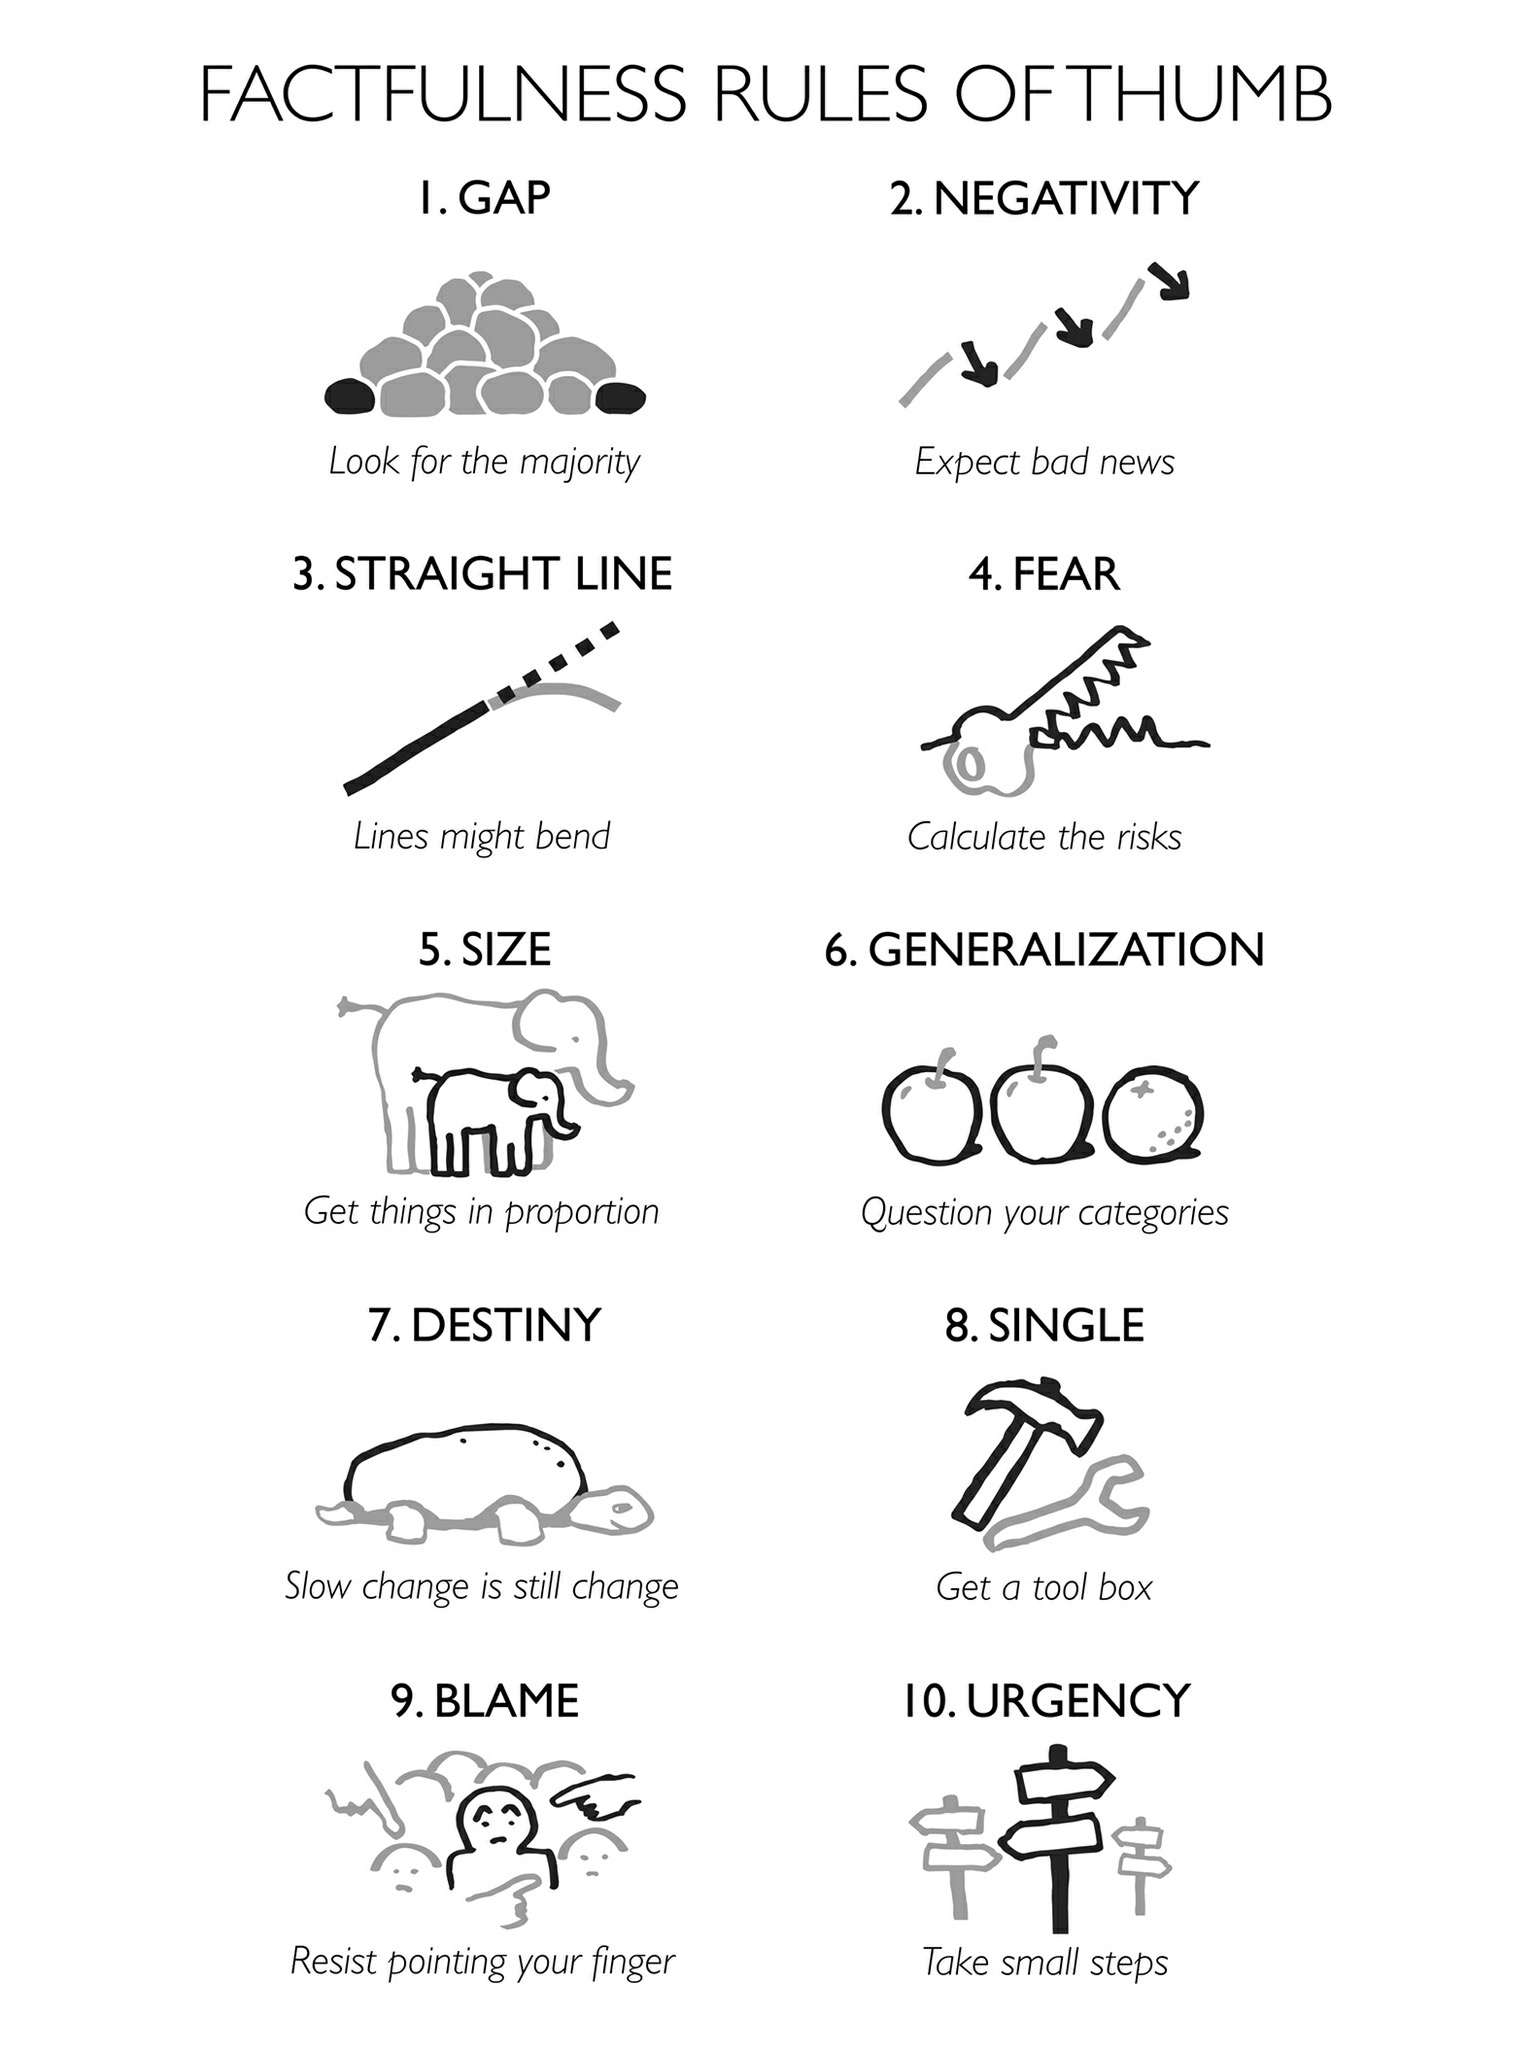 Factfulness - 10 Rules of Thumb.jpg